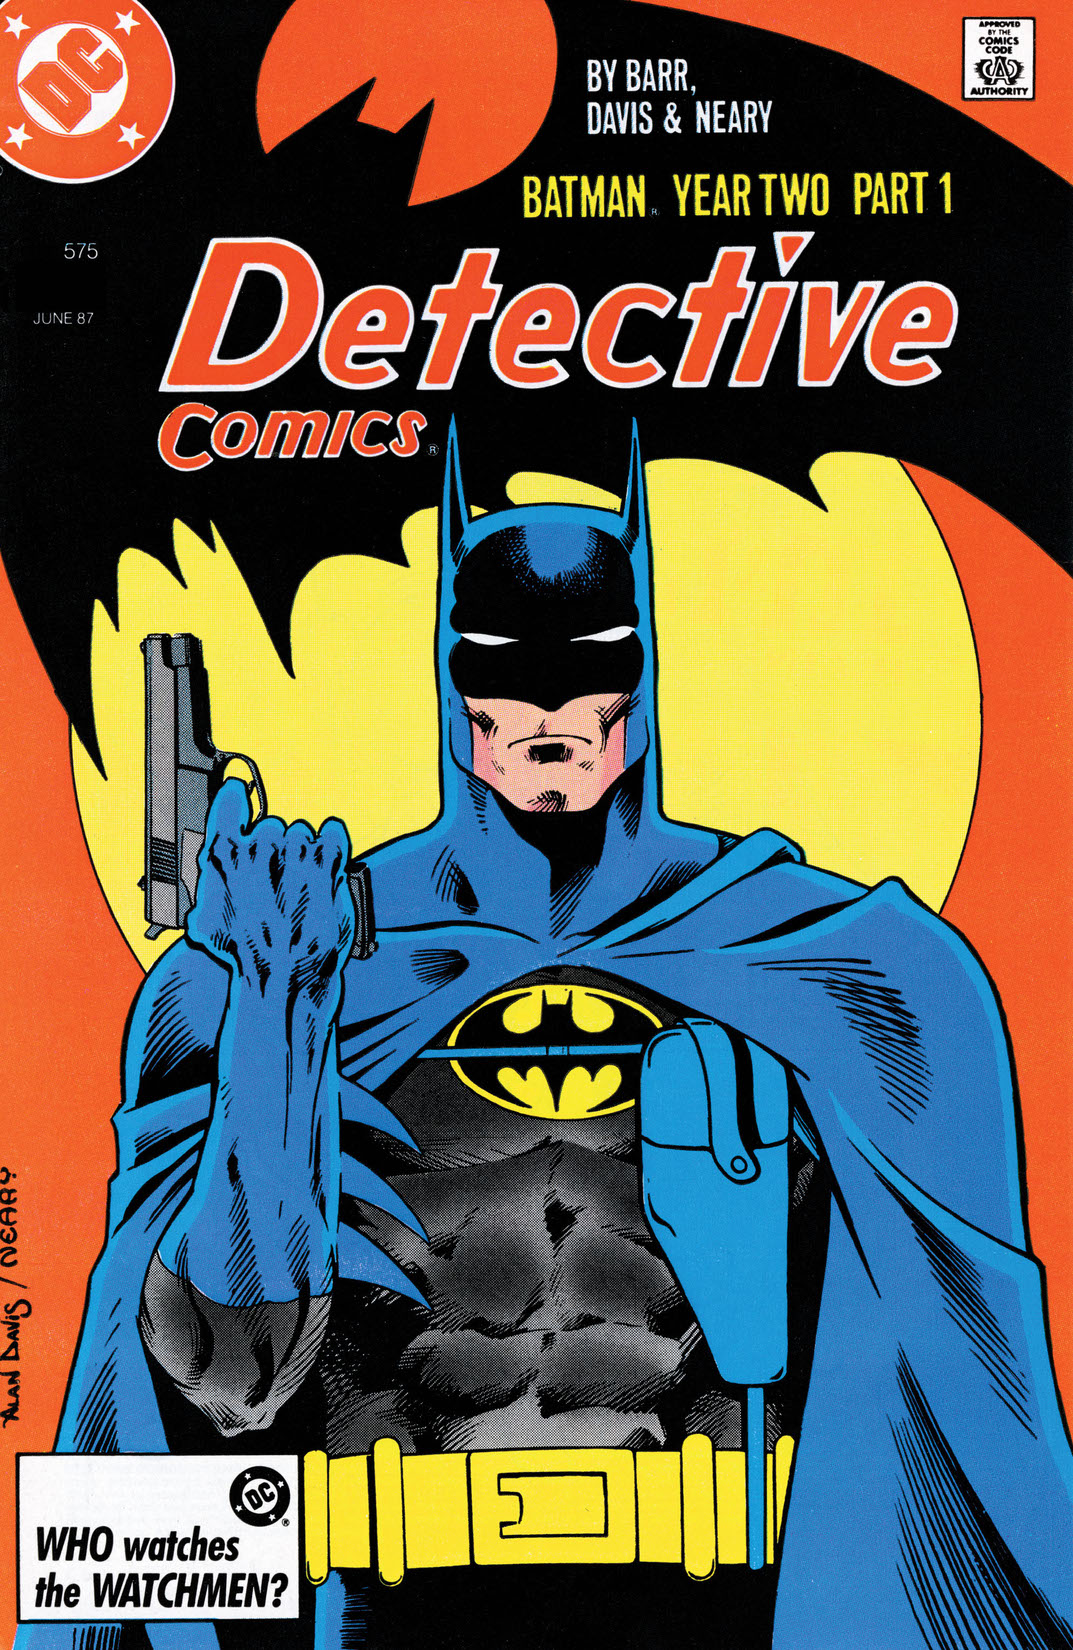 Detective Comics (1937-) #575 preview images